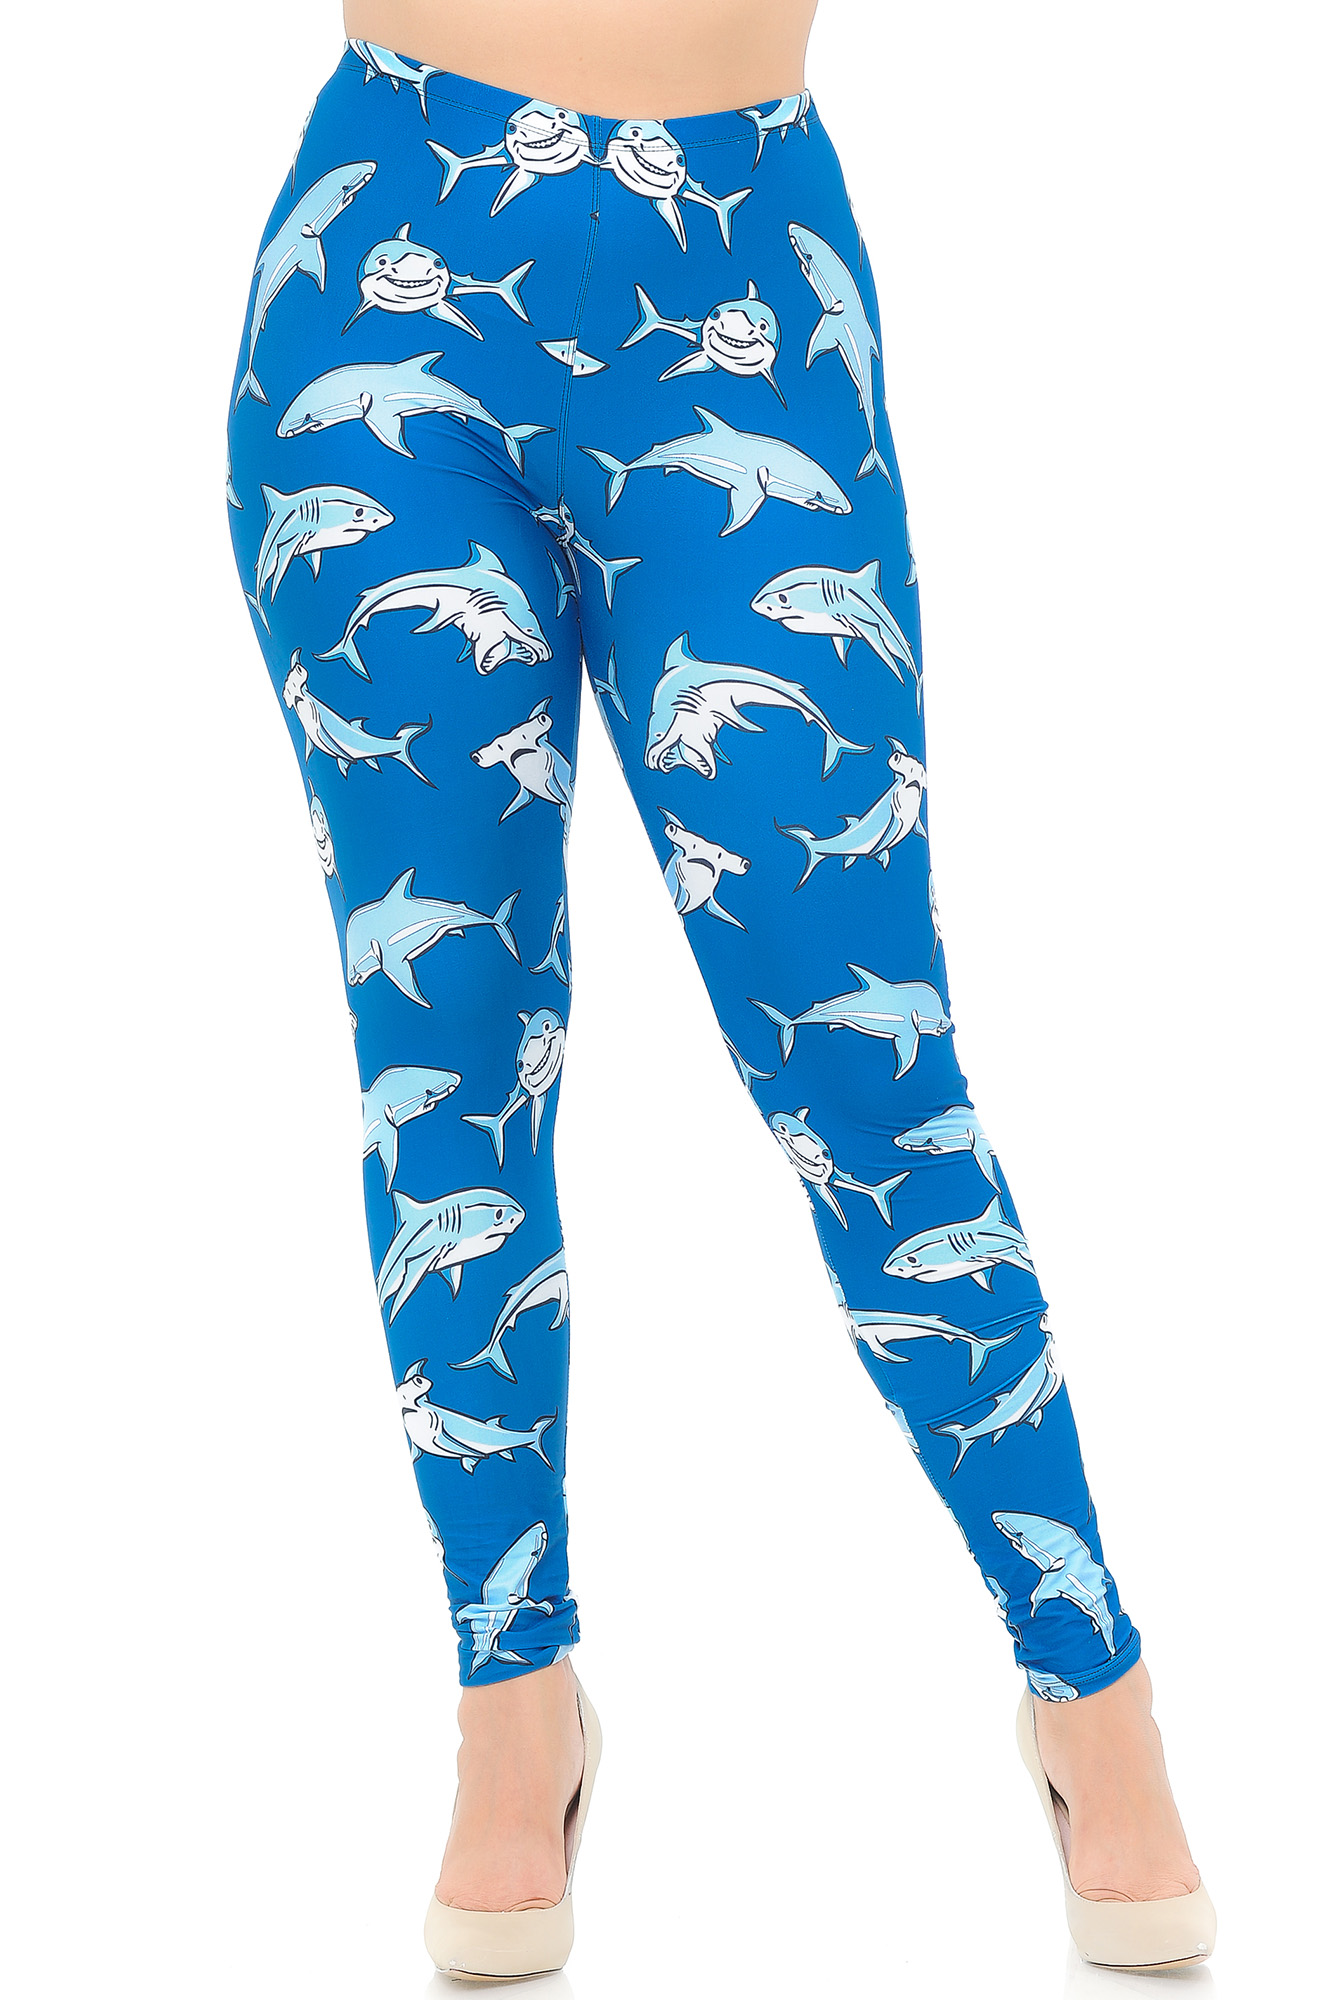 Wholesale Creamy Soft Shark Plus Size Leggings - USA Fashion™